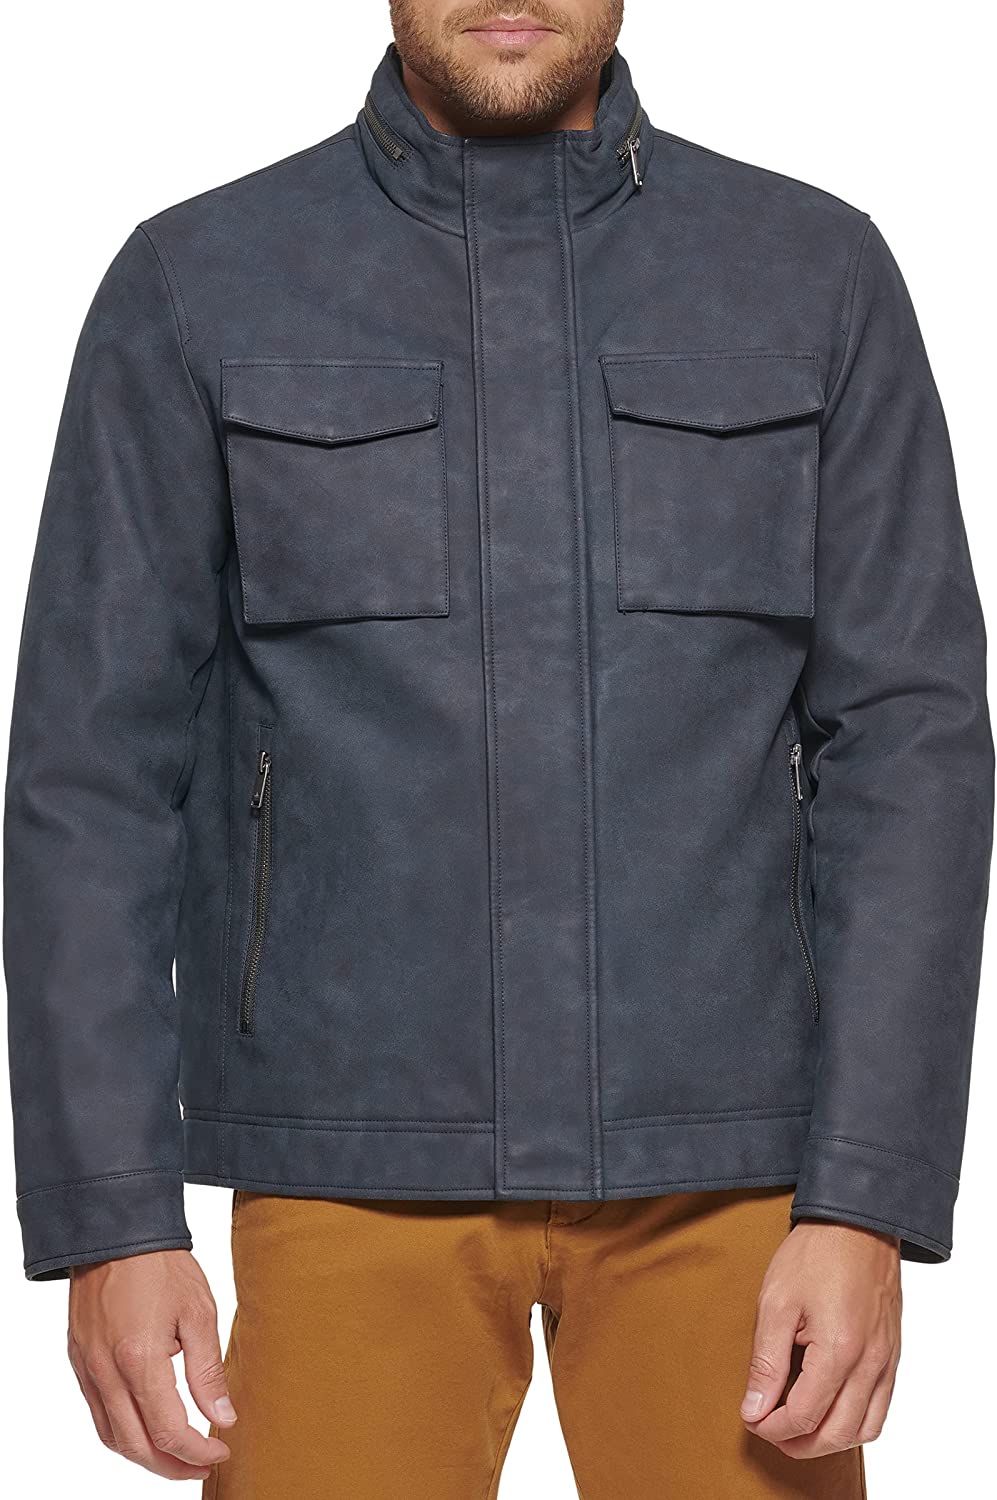 Dockers Men's Faux Leather Military Jacket | eBay